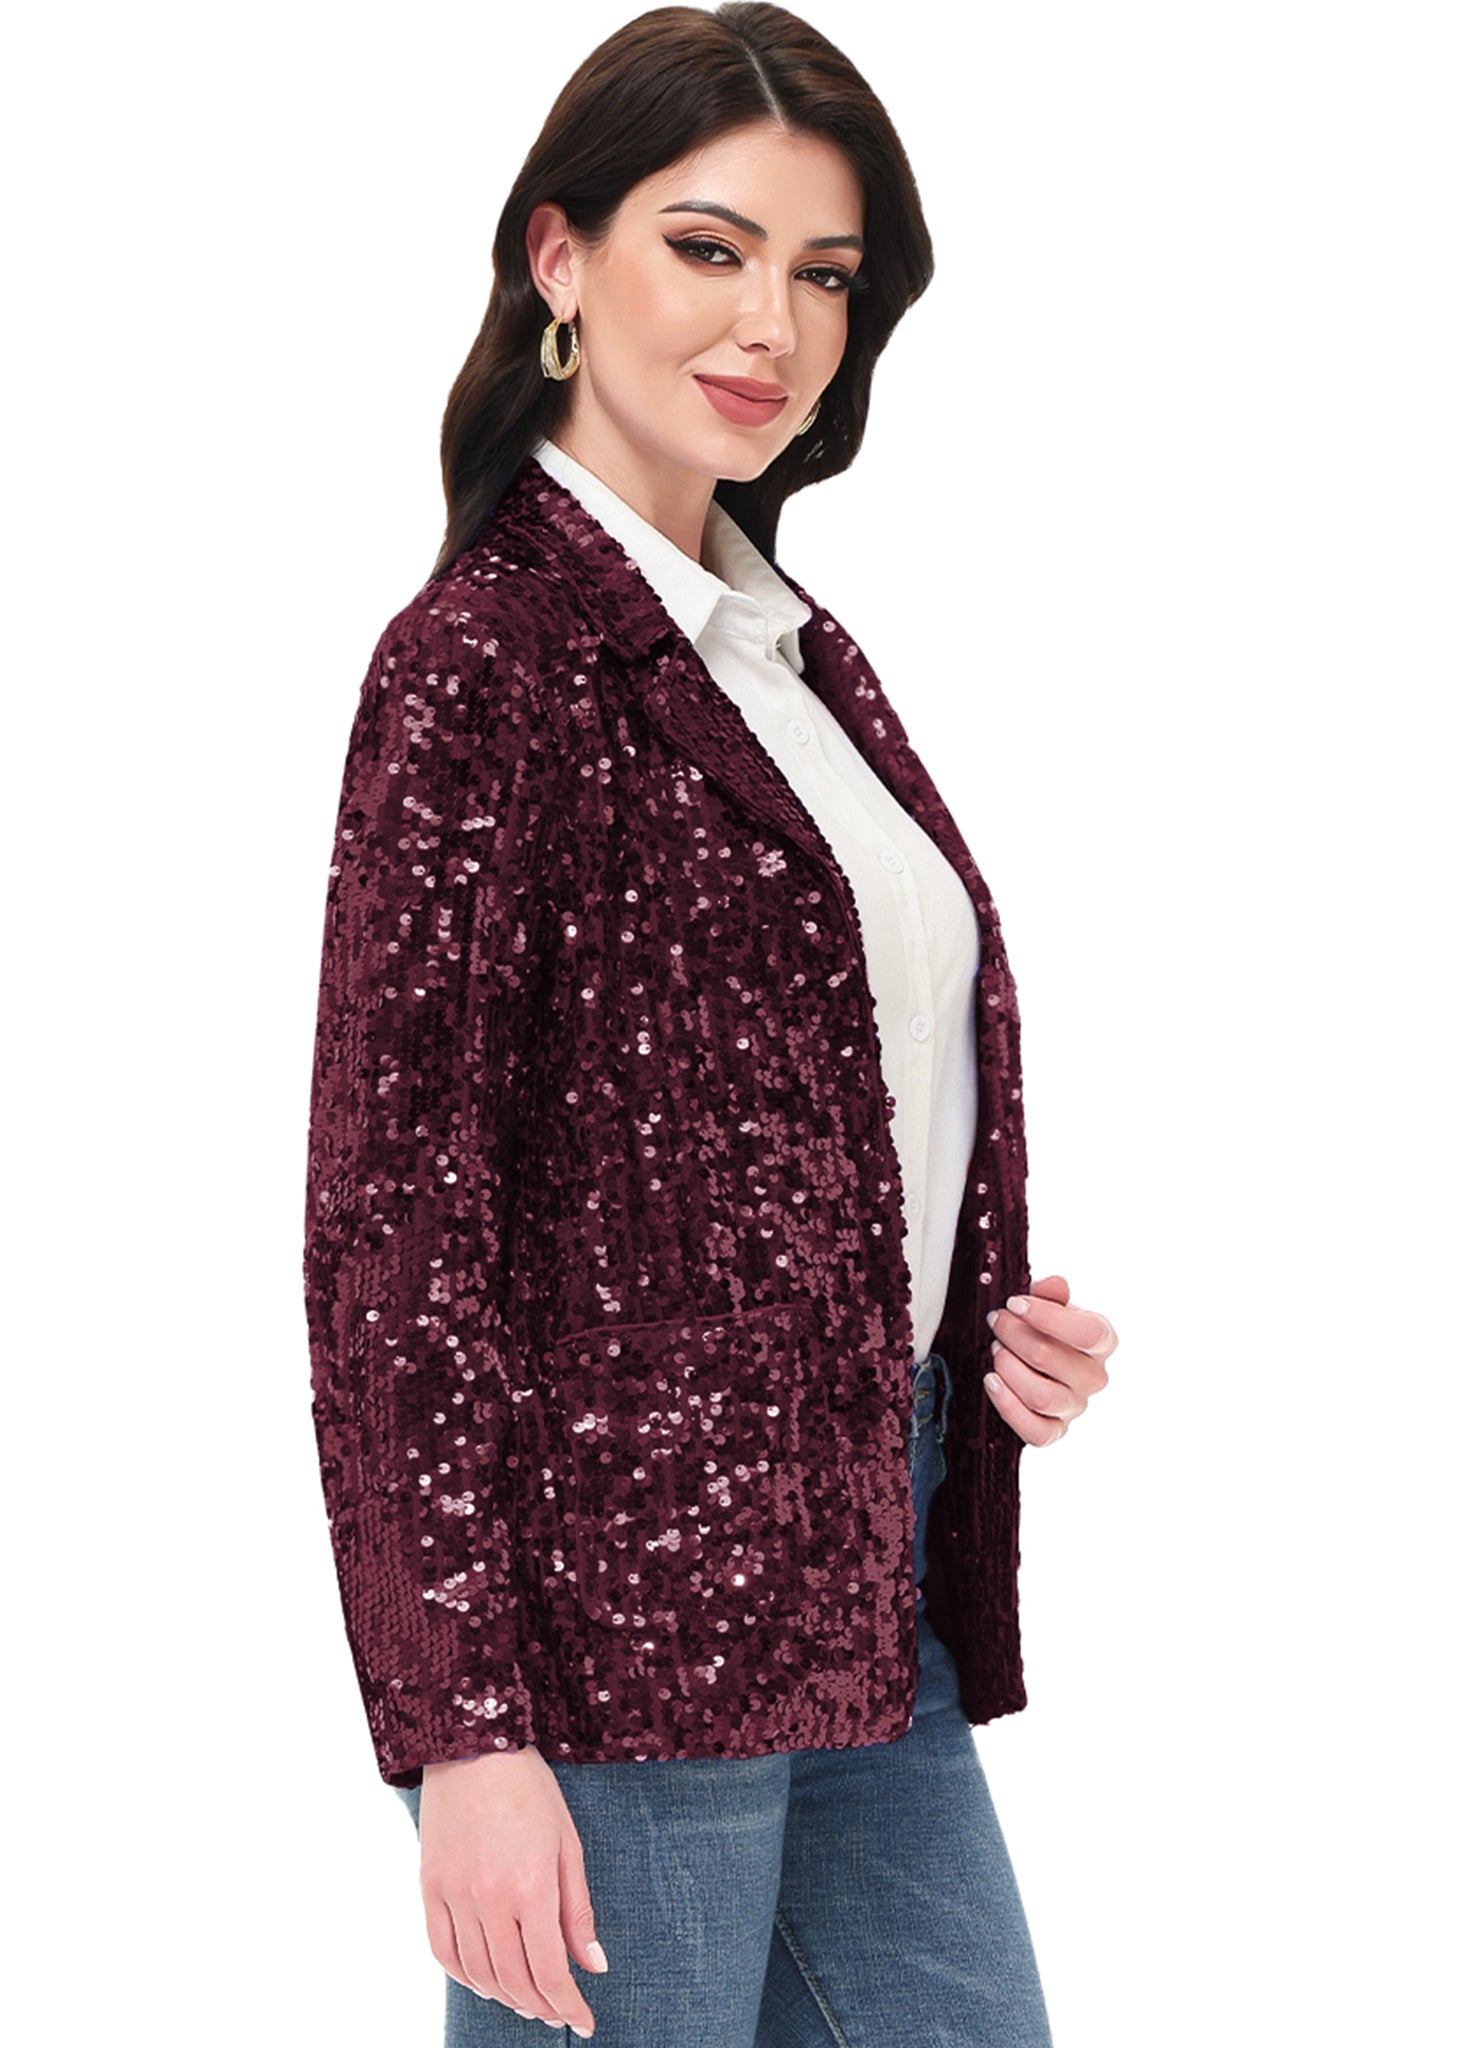 Sequin Jackets for Women Plus Size Clearance Fashion Open Front Solid Short Blazer  Jacket Womens Long Sleeve Crewneck Casual Coat Tops Blouses Hot Pink  qILAKOG Size XXXL - Walmart.com